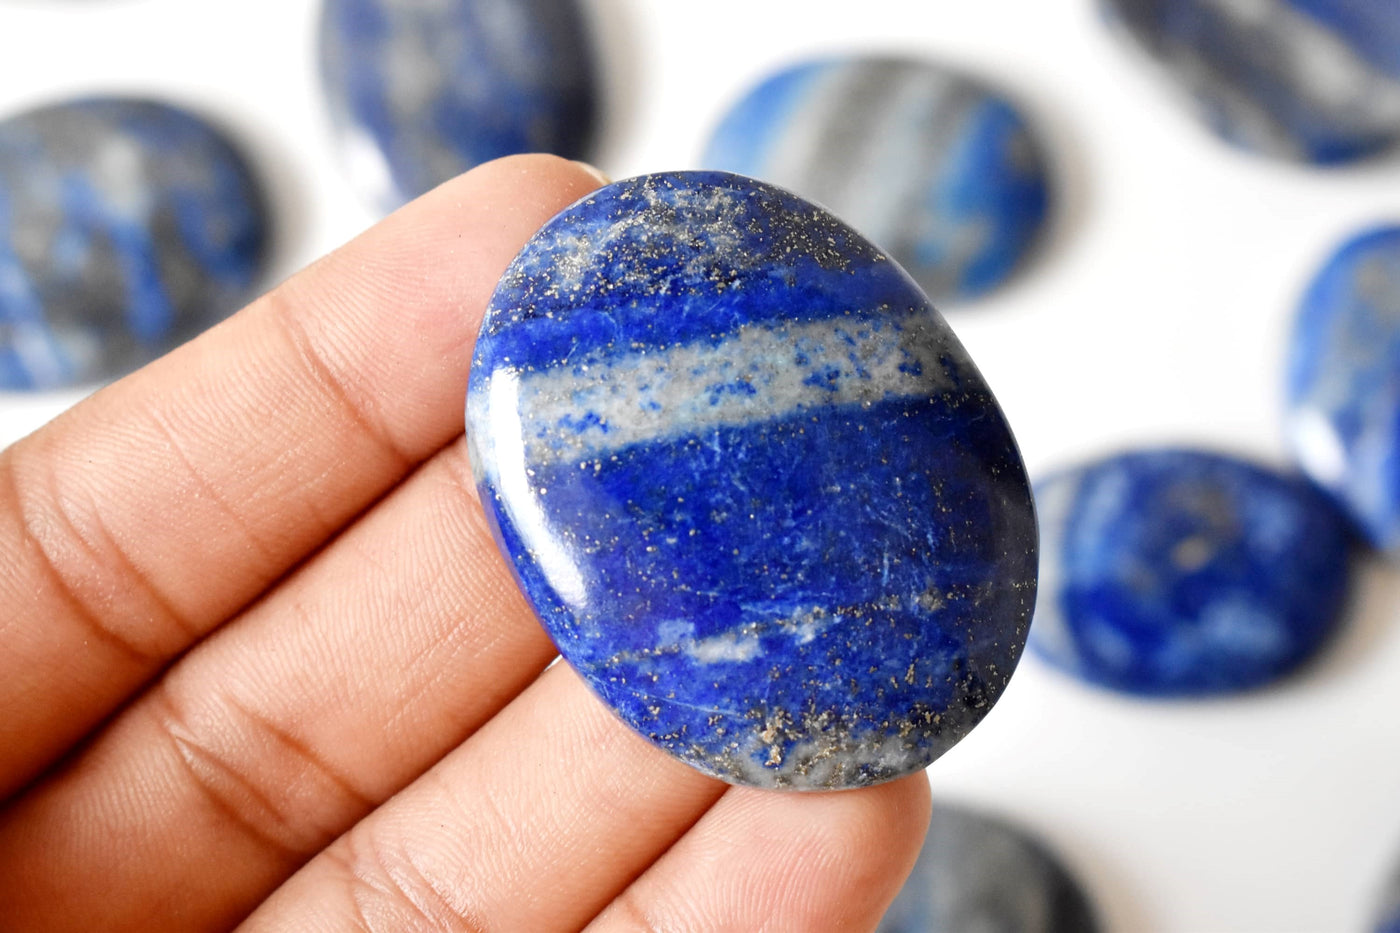 Lapis Lazuli Pocket Stones (Grounding and Protection)